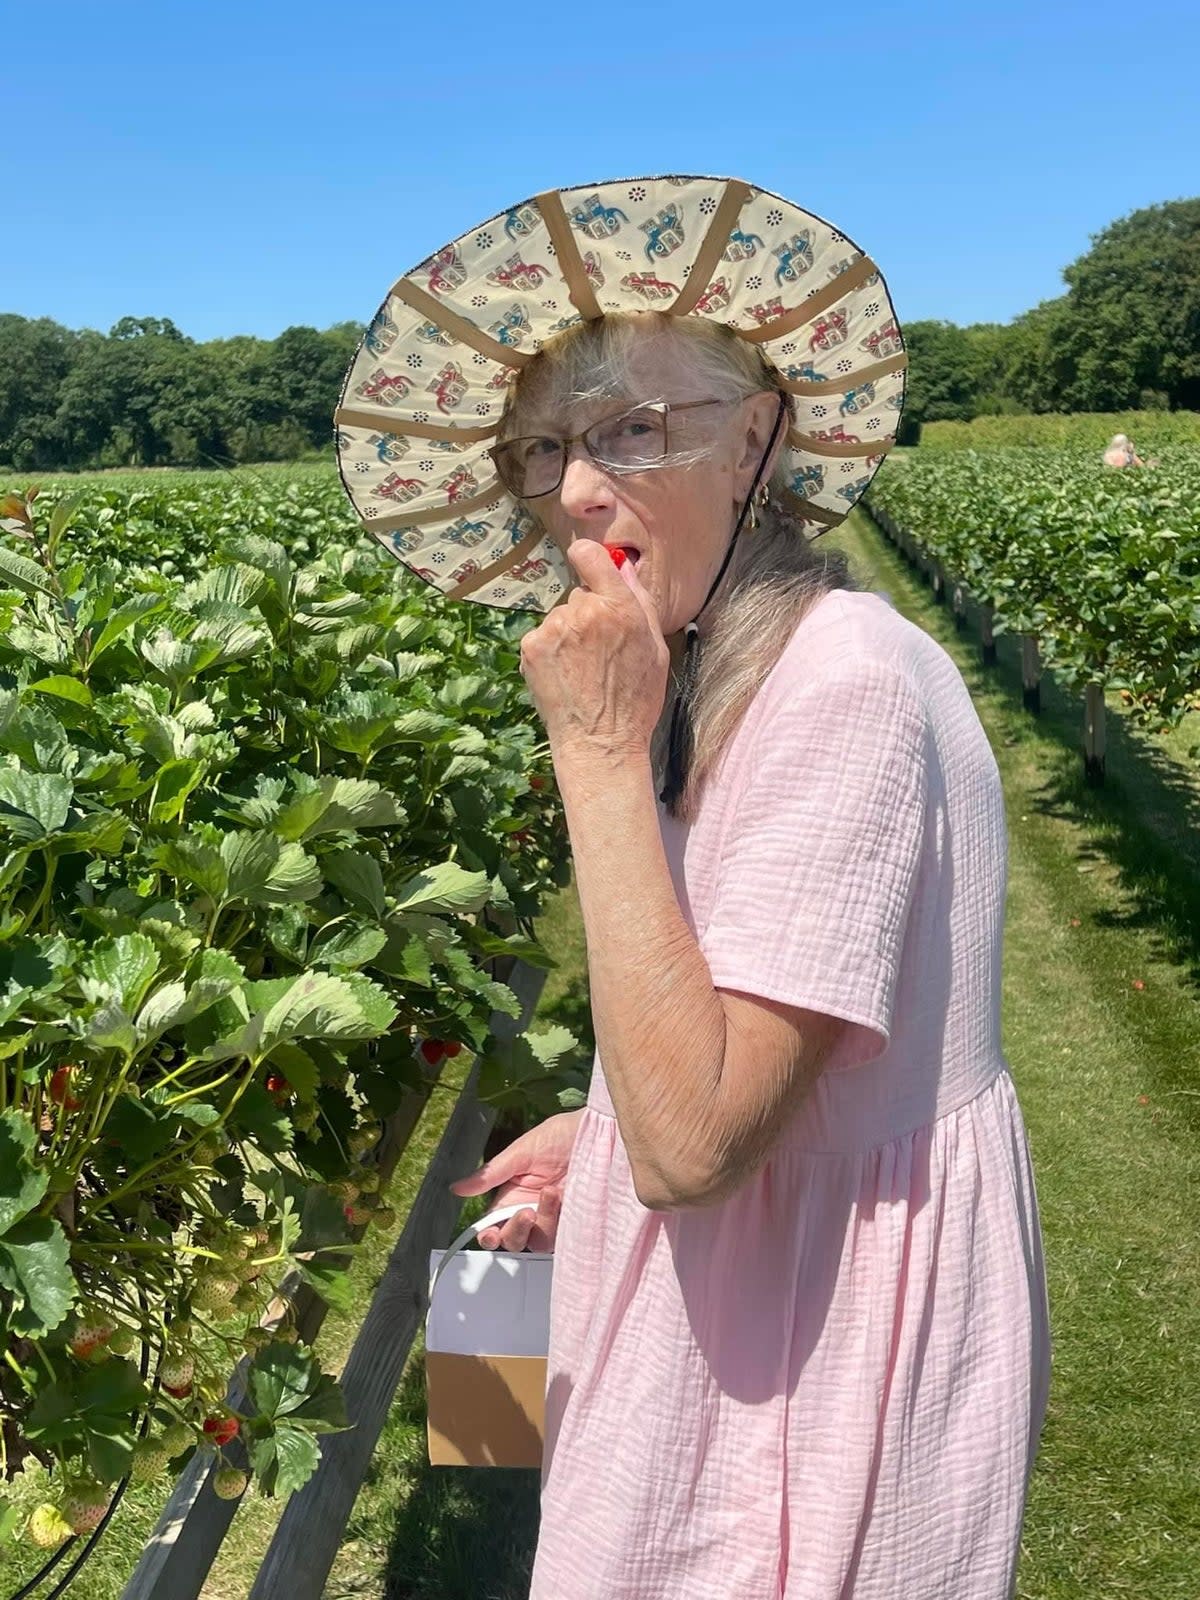 Sharon picking strawberries (Provided)